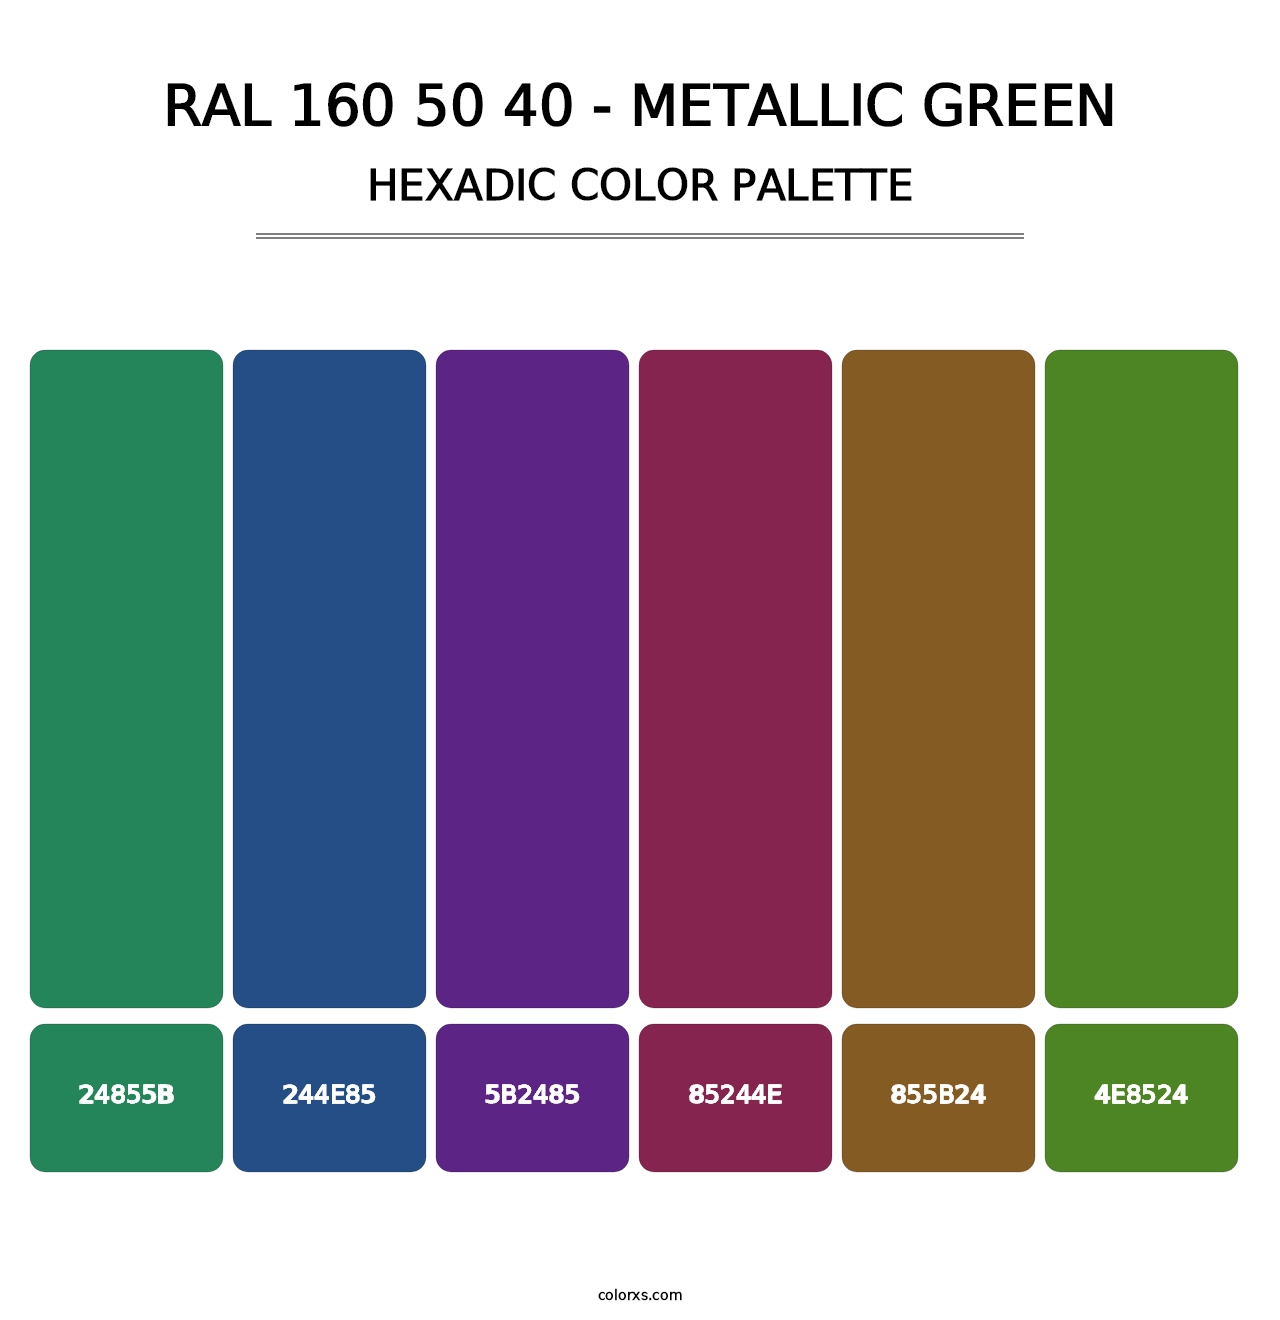 RAL 160 50 40 - Metallic Green - Hexadic Color Palette